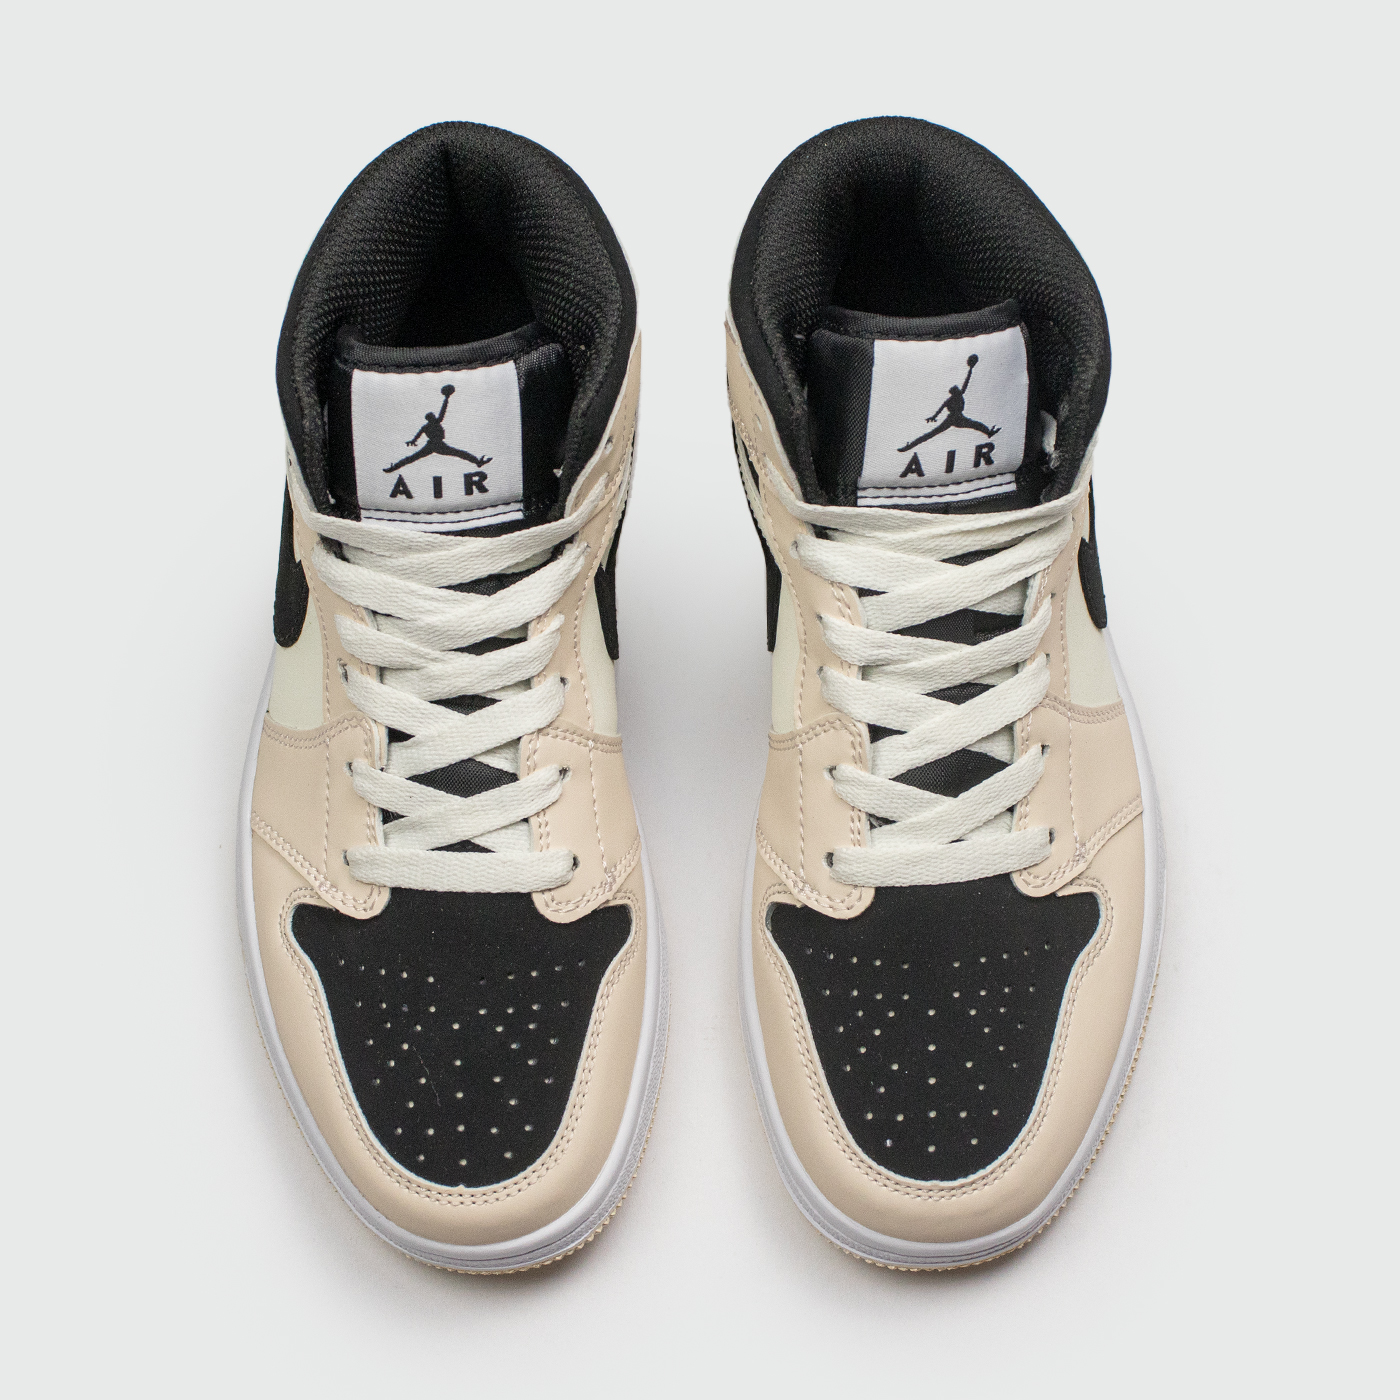 Nike Air Jordan 1 Wmns Cream Black